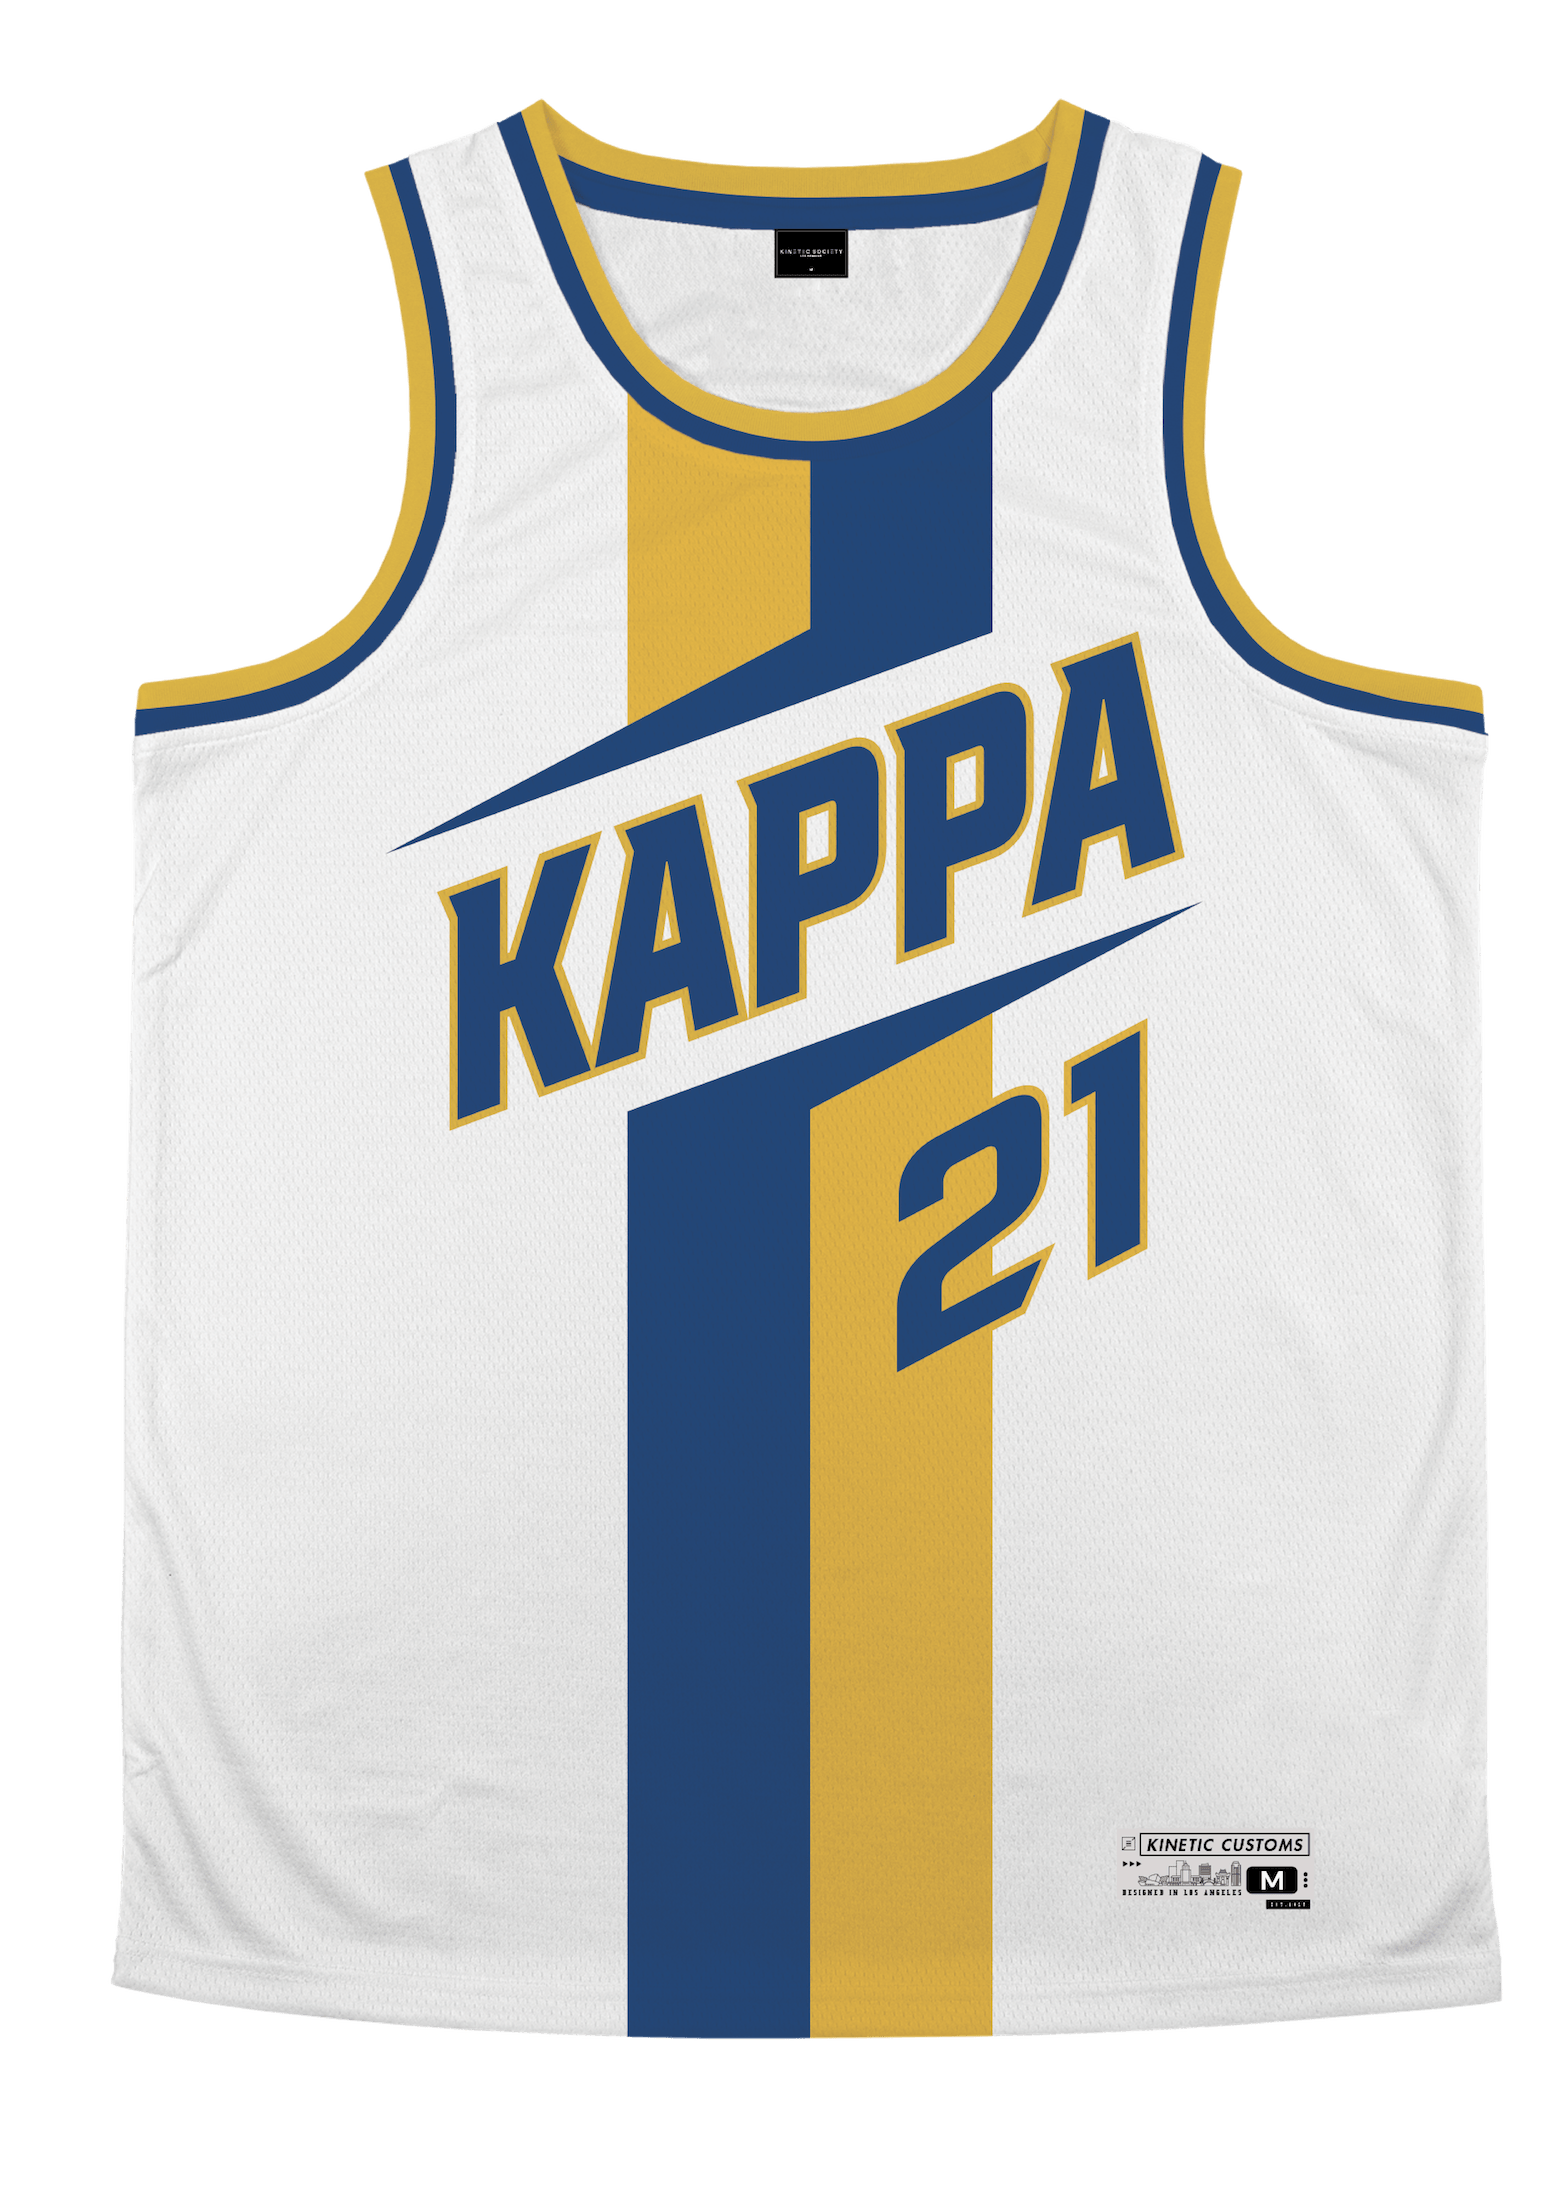 Kappa Kappa Gamma - Middle Child Basketball – Kinetic Society LLC